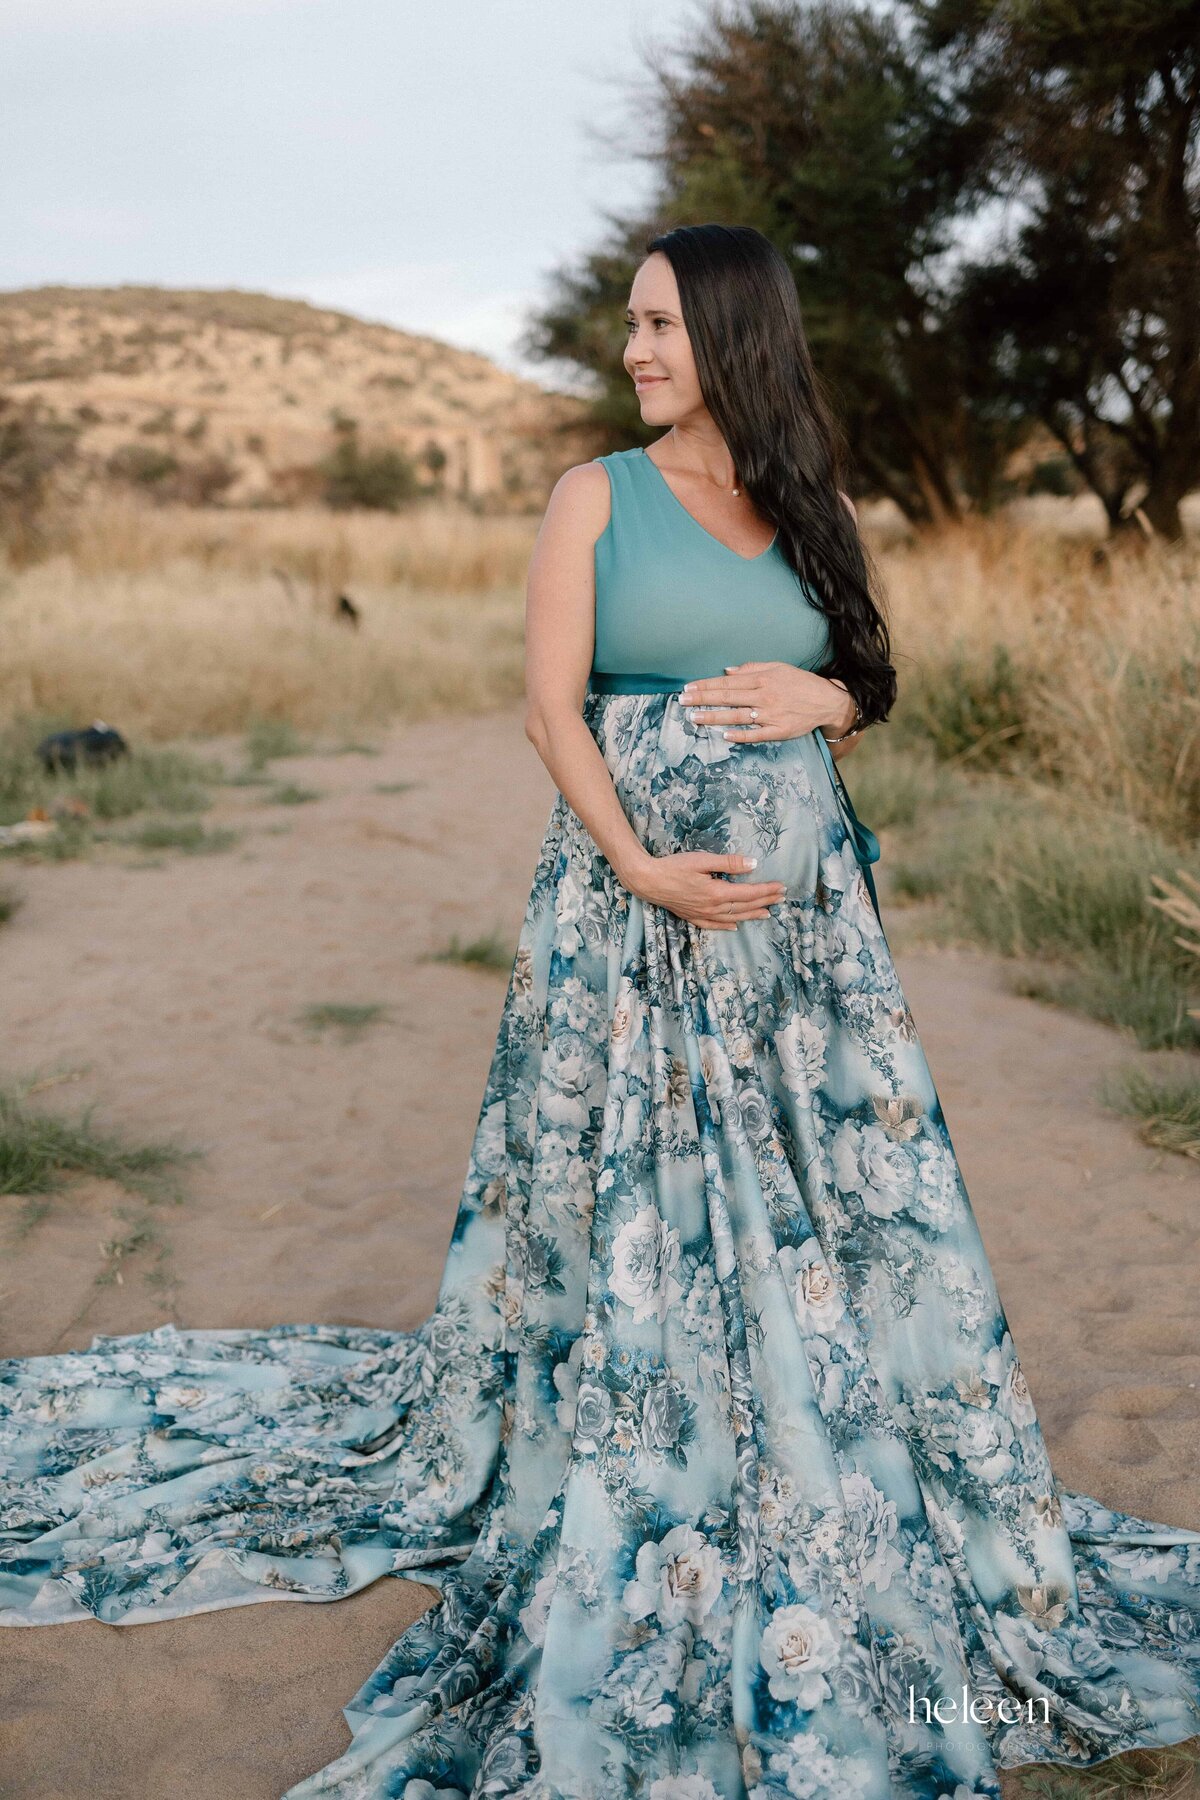 Kevin Maternity Shoot Avis Dam Windhoek Namibia Africa-45